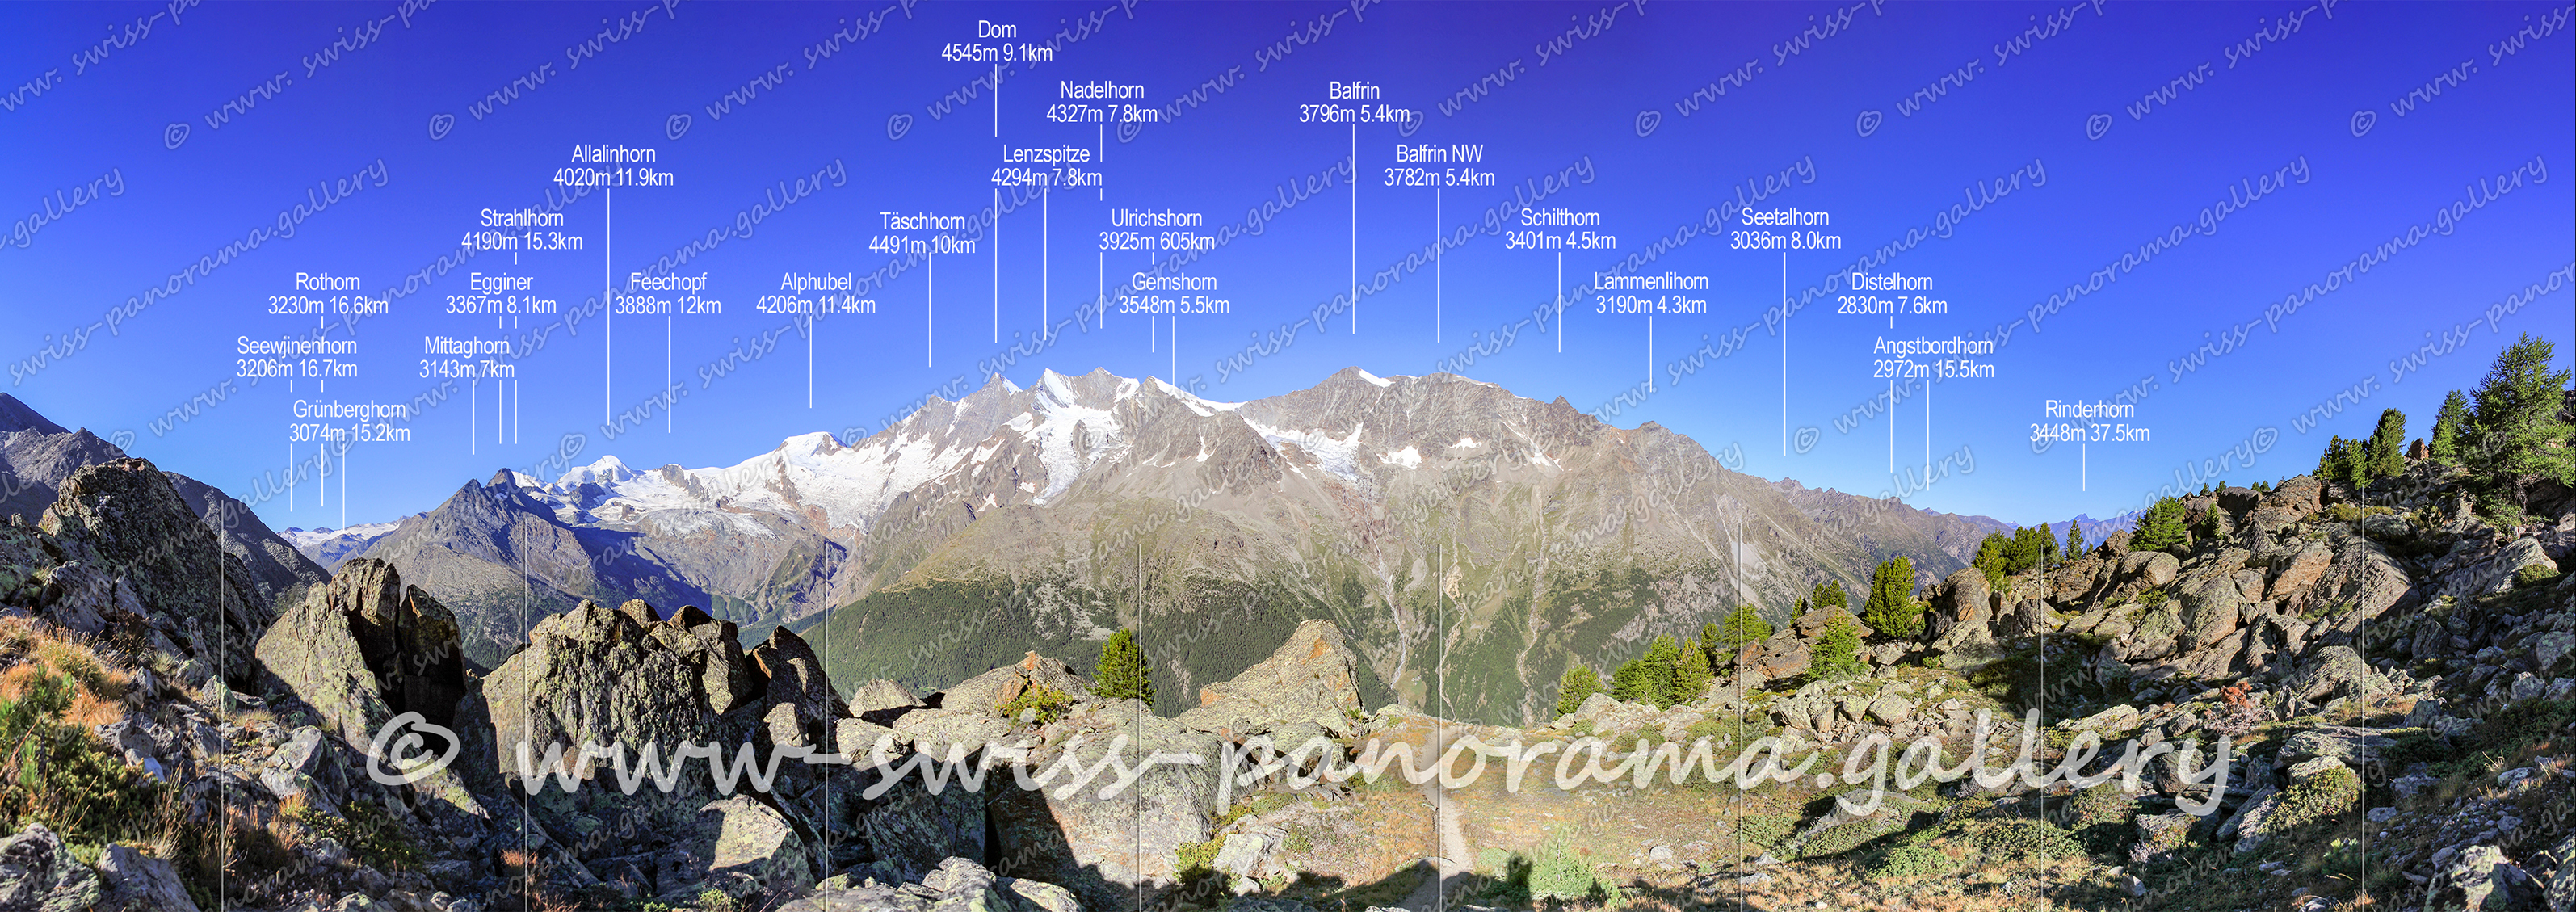 Panorama Saastal Hohsaas Walliser Alpenpanorama swiss-panorama.gallery